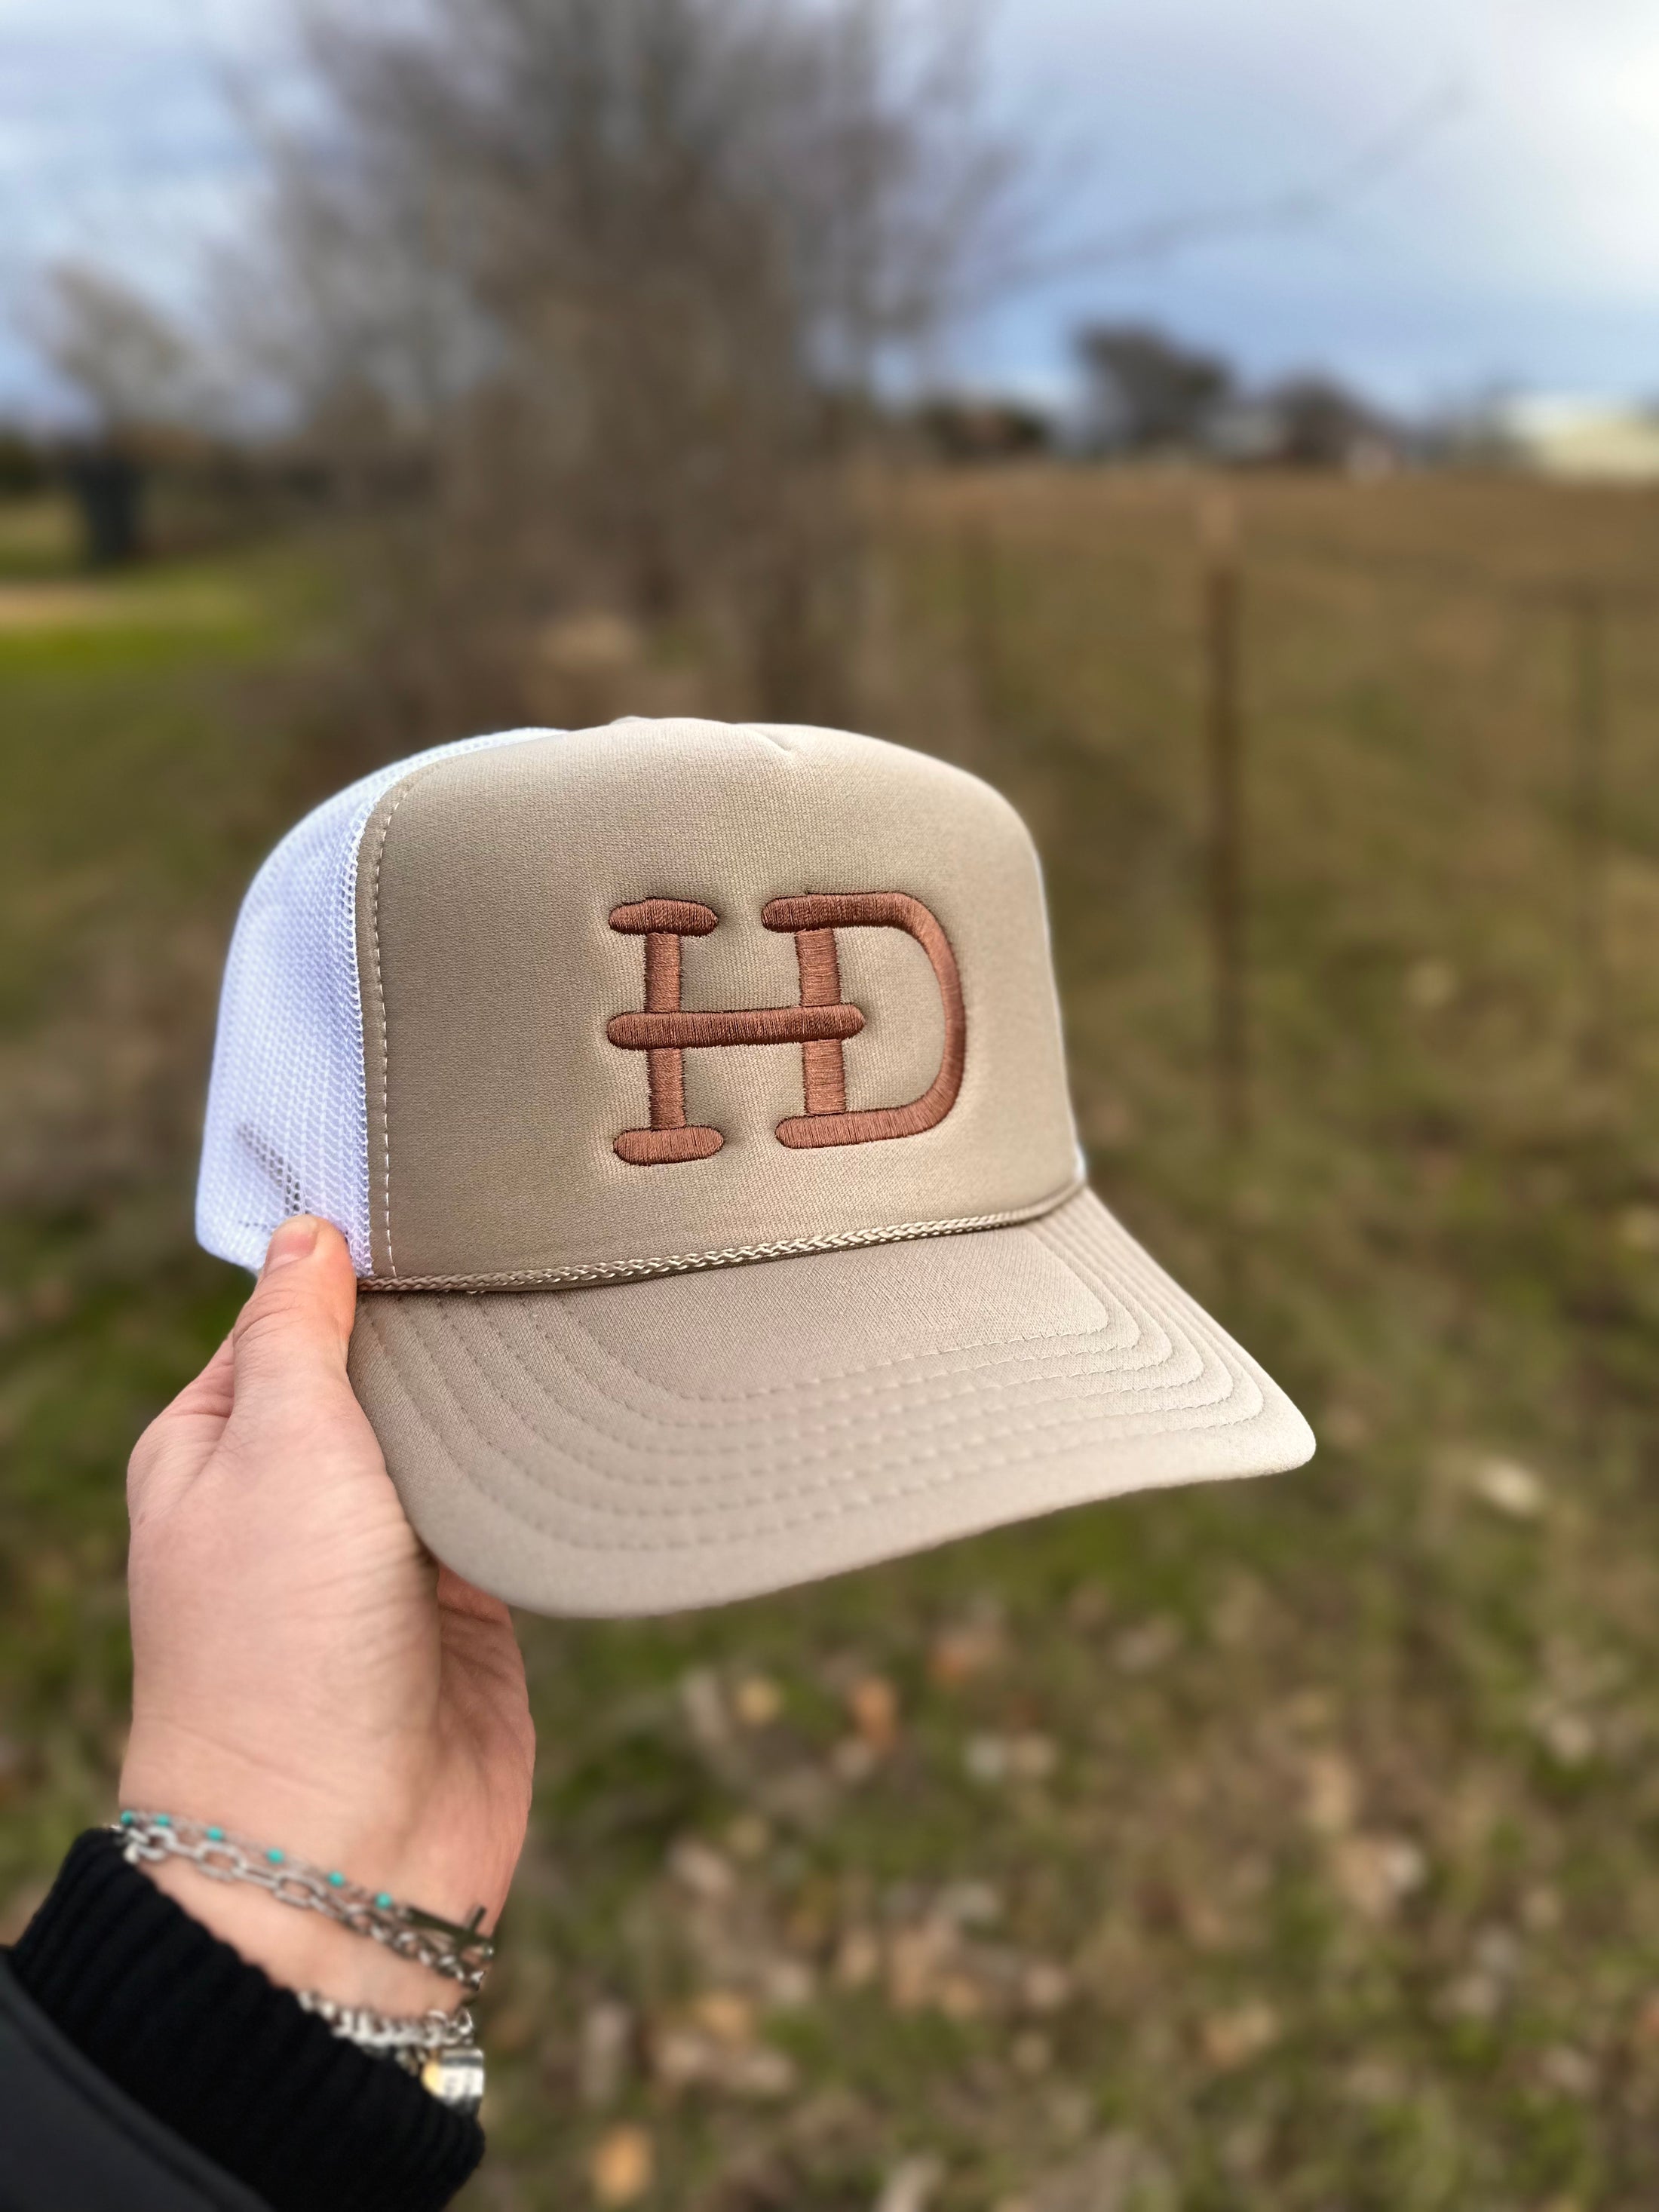 HD Brand Mesh Trucker Hat - Khaki